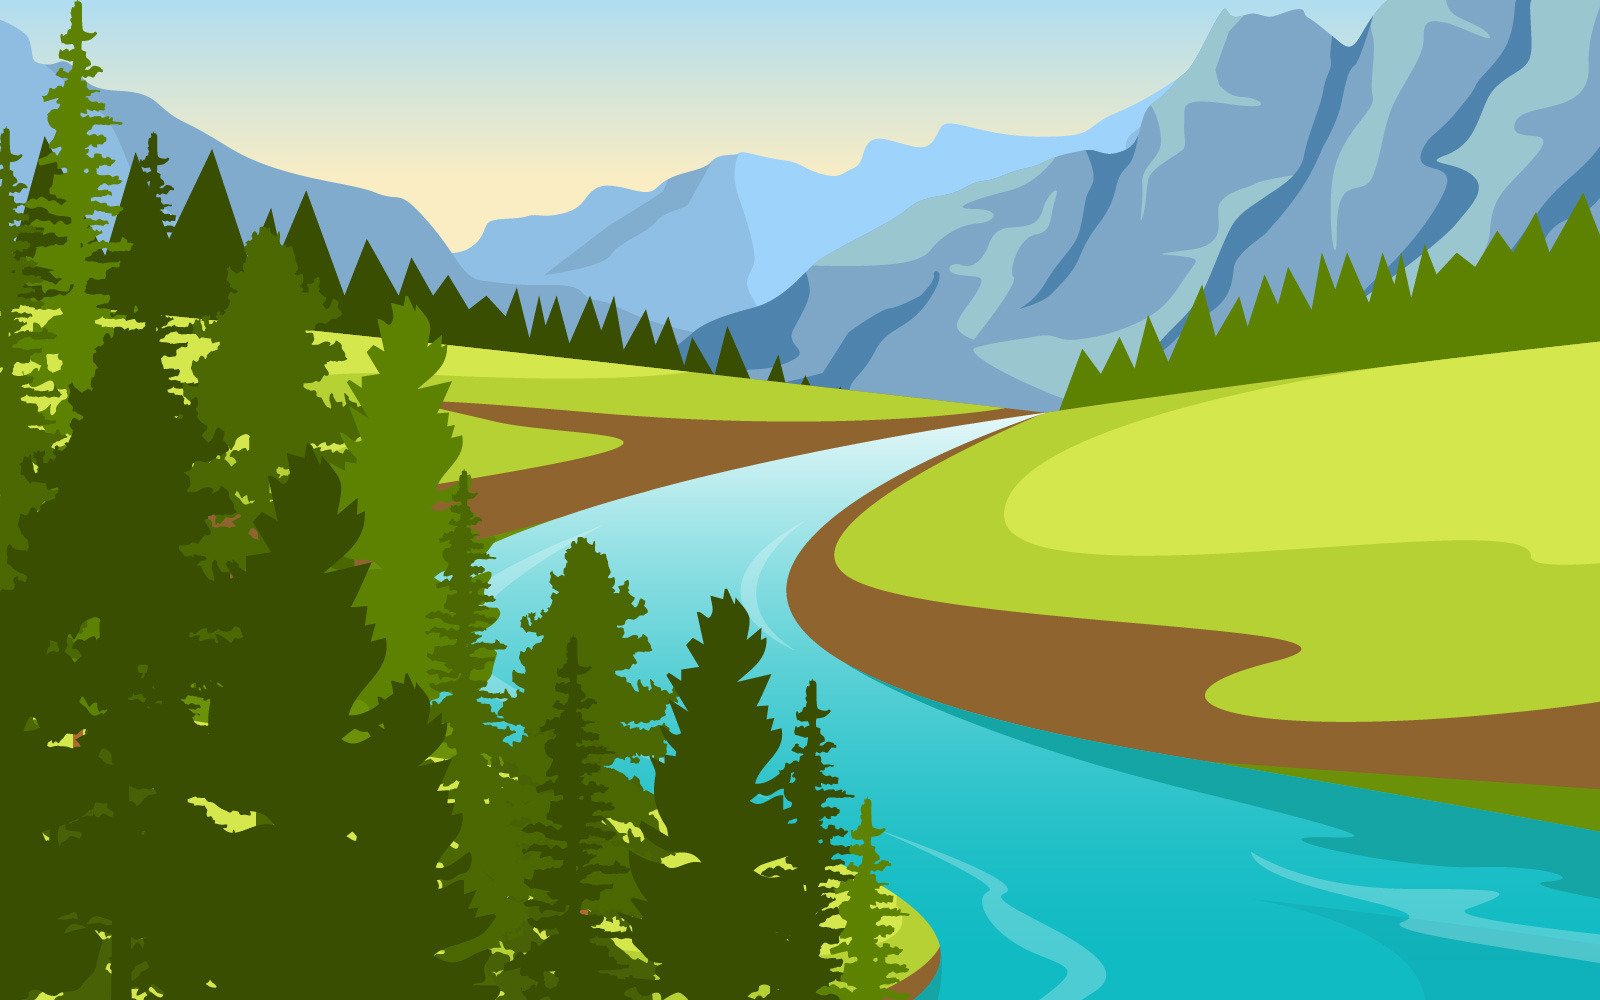 Winding River Nature - Illustration #124875 - TemplateMonster